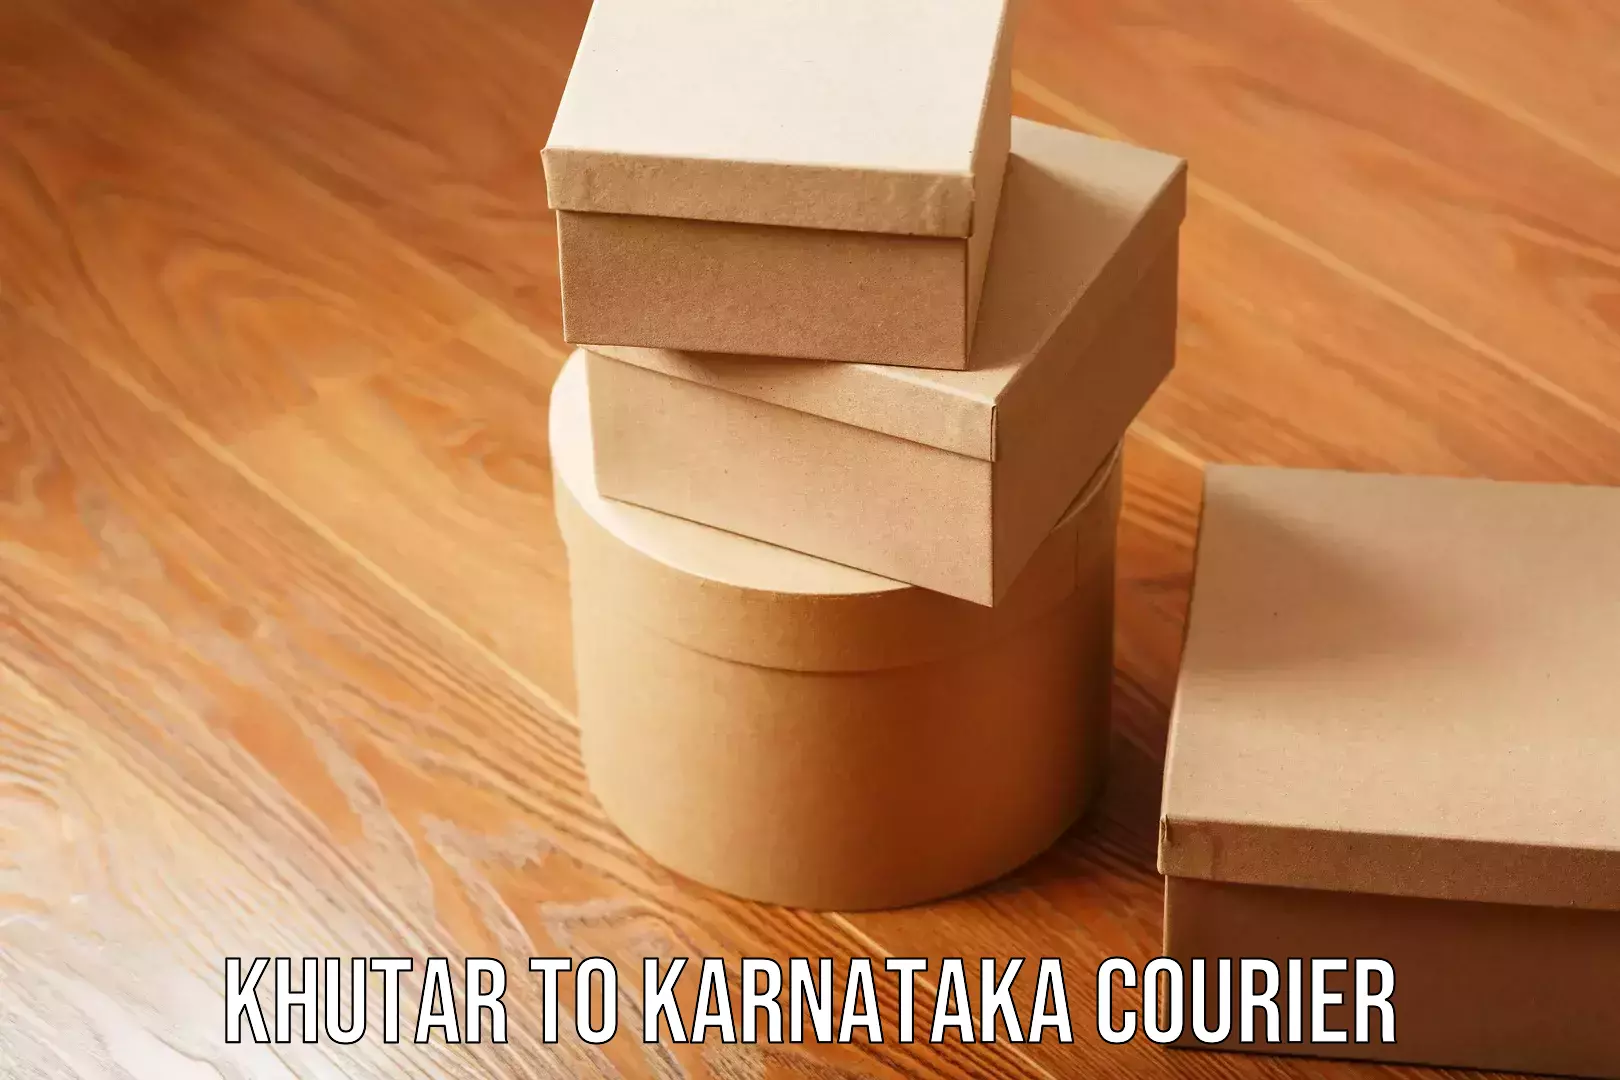 Skilled furniture movers Khutar to Karnataka